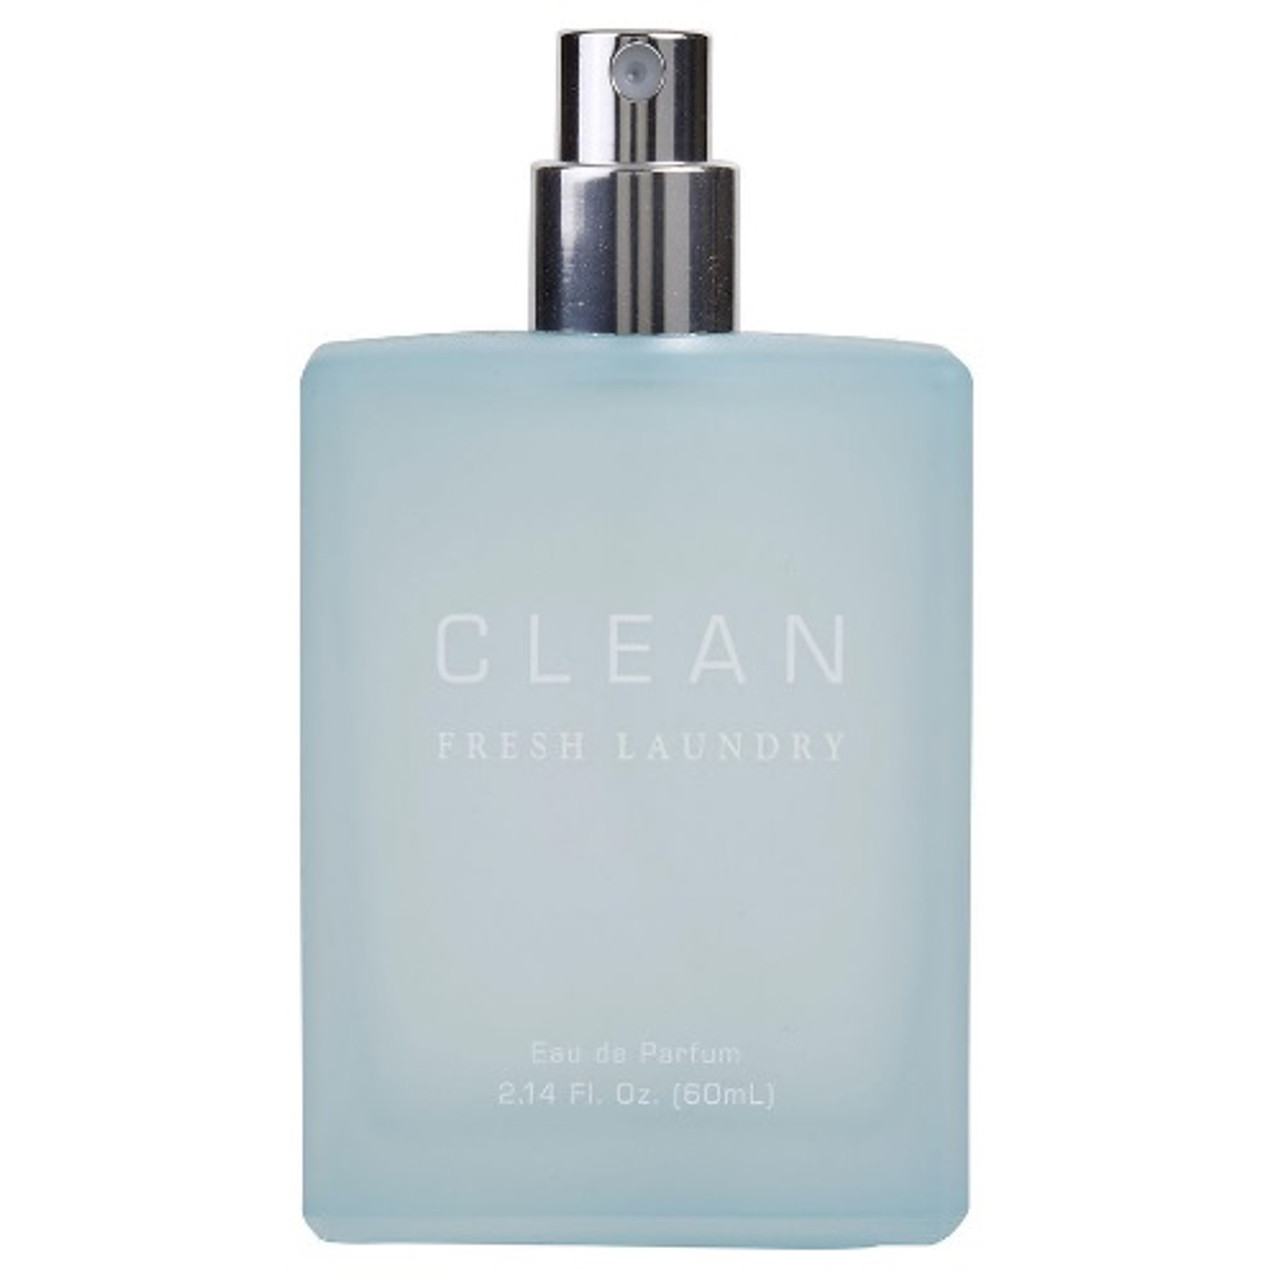 Clean Laundry 2.14 oz EDP Perfume for Women -